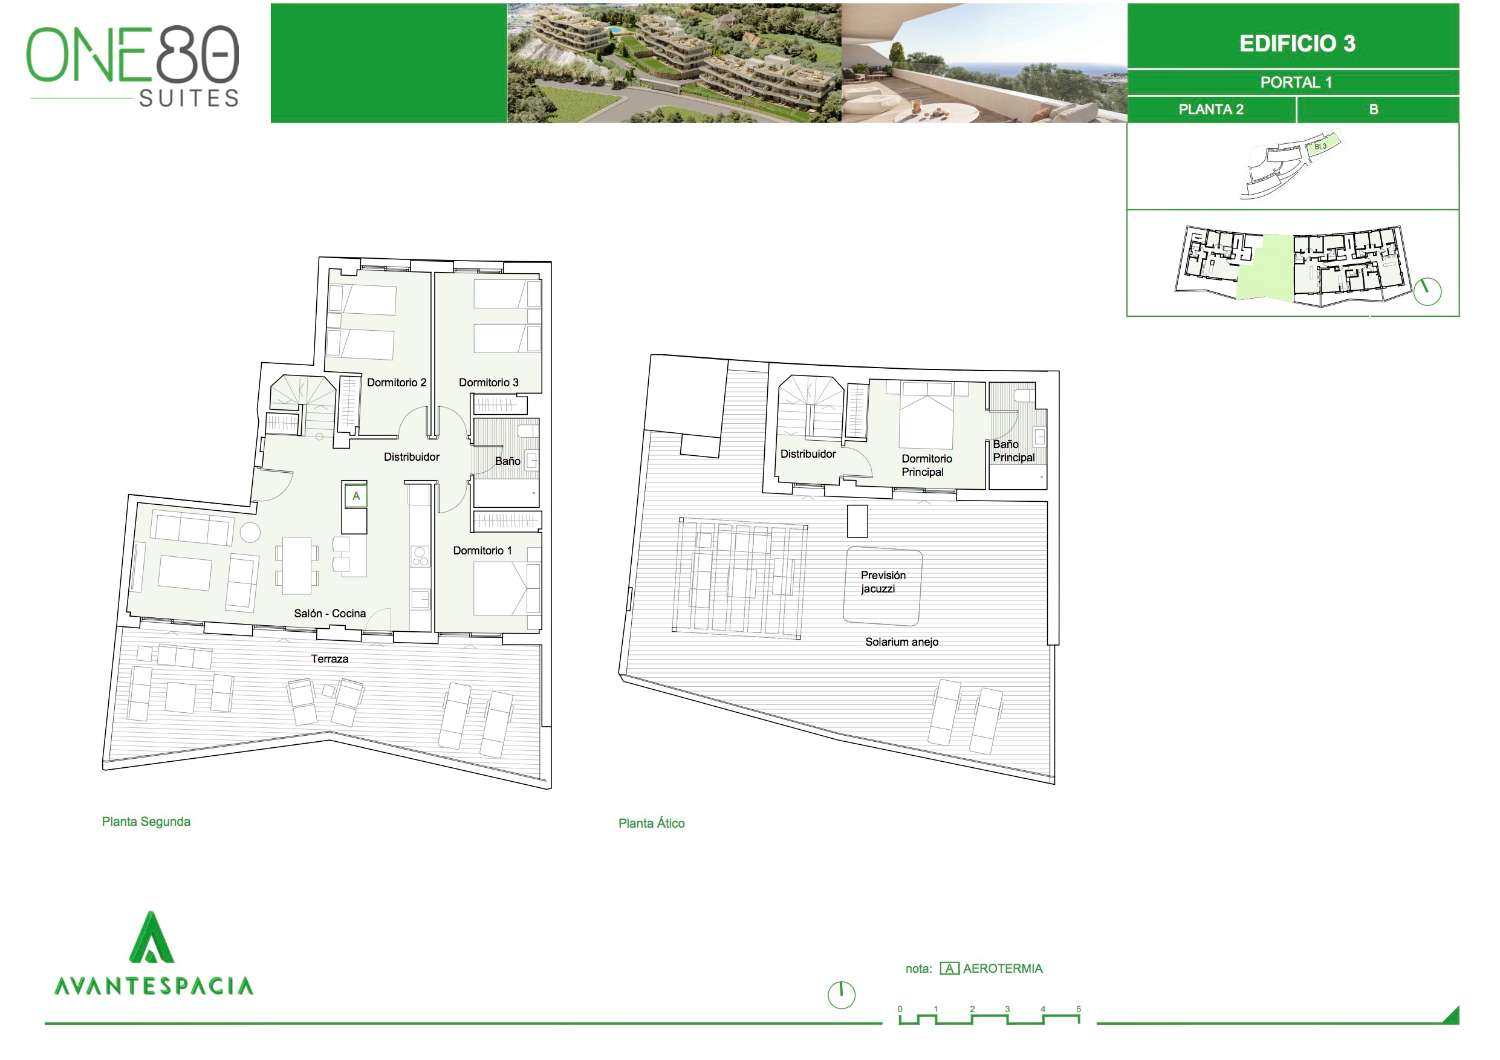 New Penthouse Development in Estepona - Costa del Sol